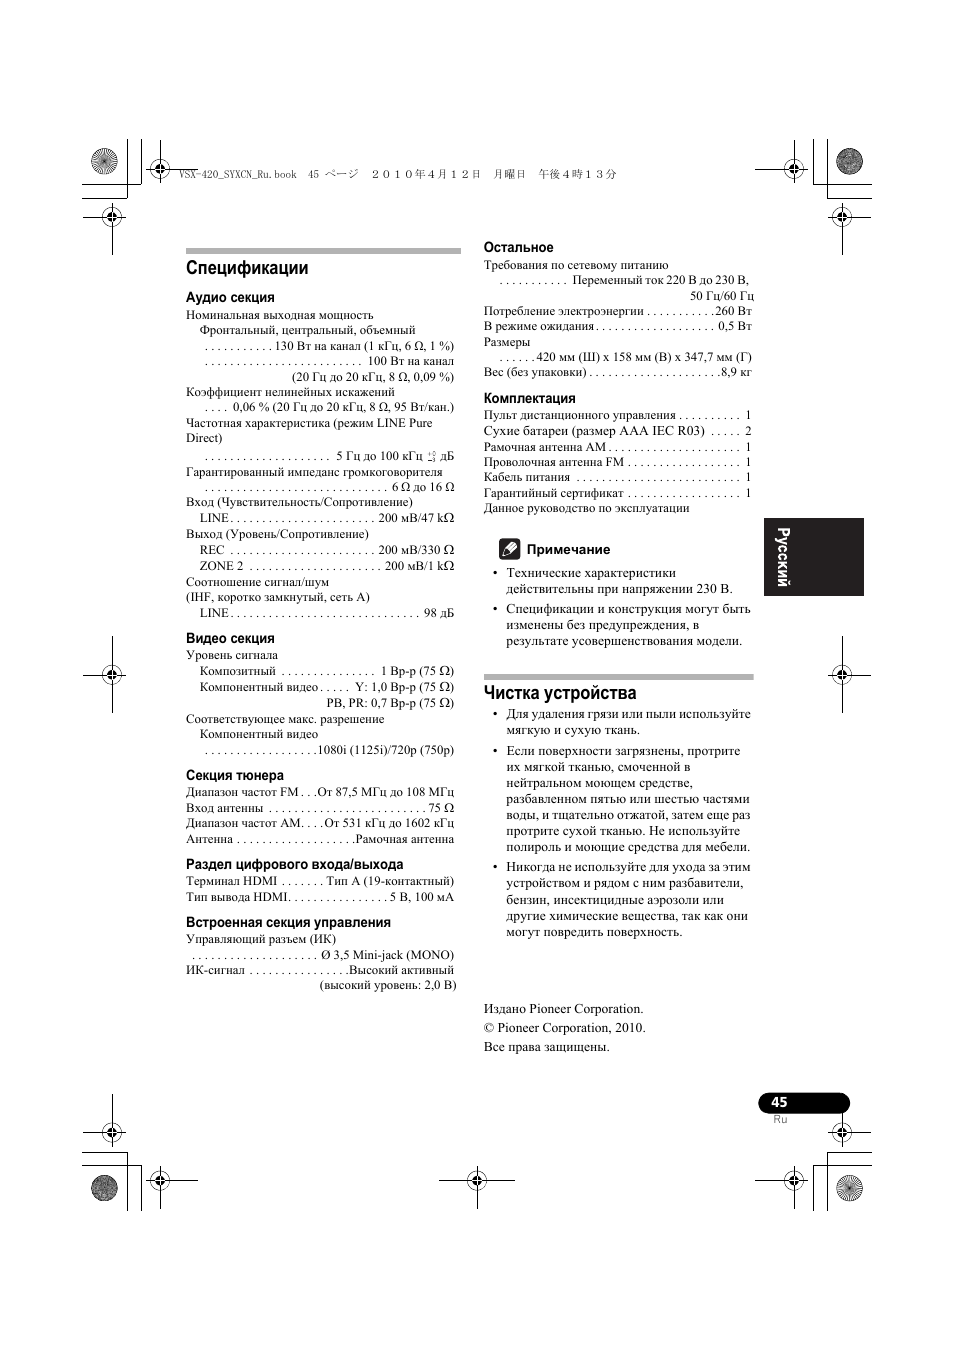 Спецификации, Чистка устройства | Pioneer VSX-420-S User Manual | Page